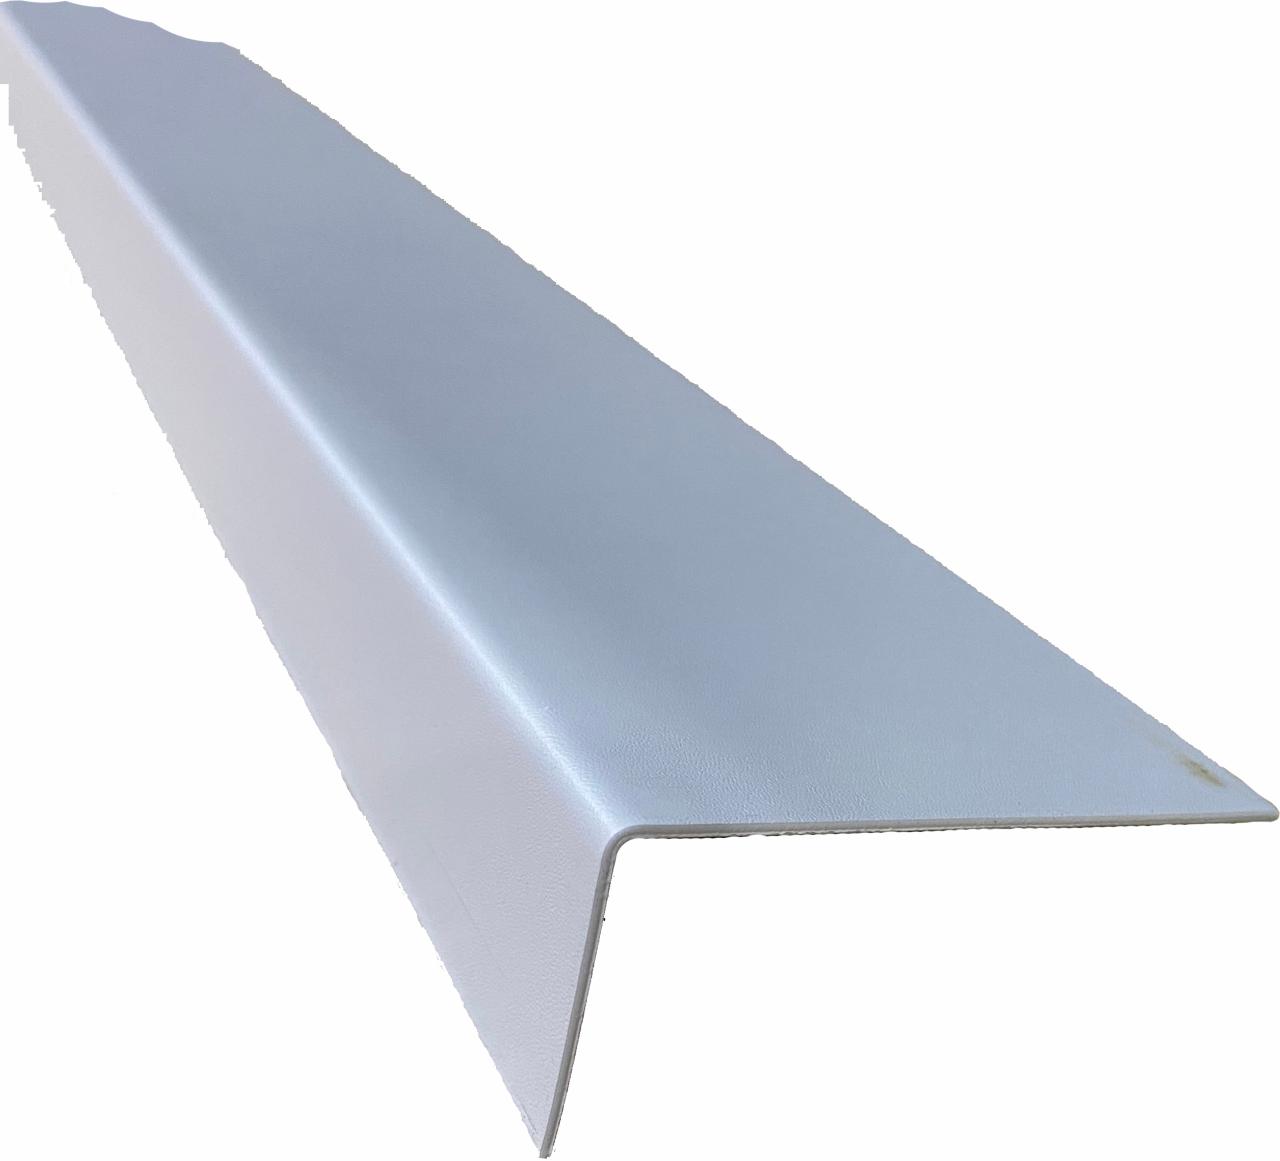 L-profile 40 x 20 mm - length 2 m (outer corner)